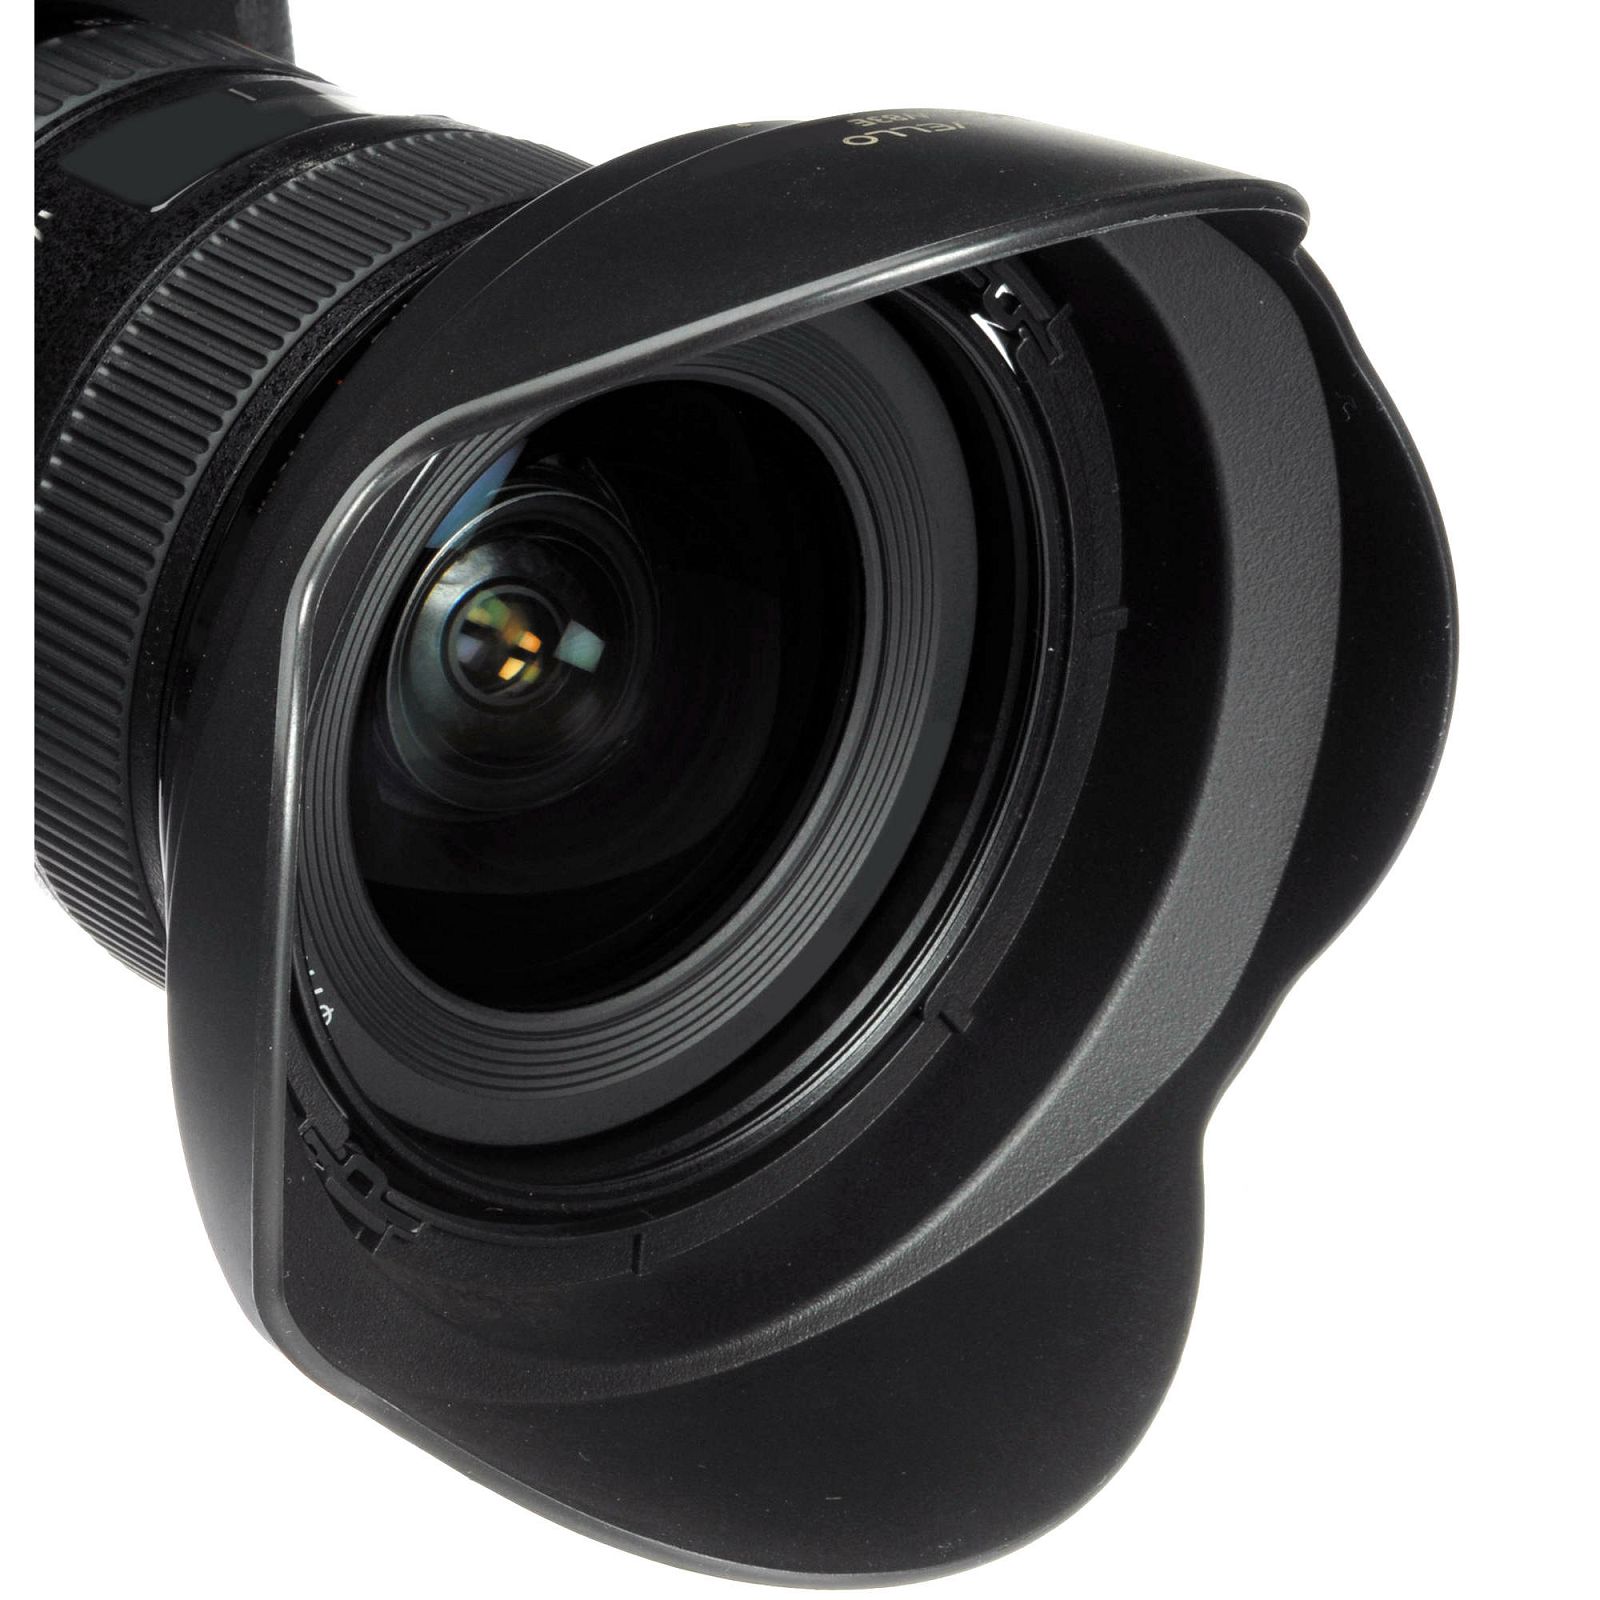 Sjenilo za objektiv HB-32 Nikon 18-140, 18-105, AF-S 18-135mm f/3.5-5.6G, 18-70mm f/3.5-4.5 lens hood